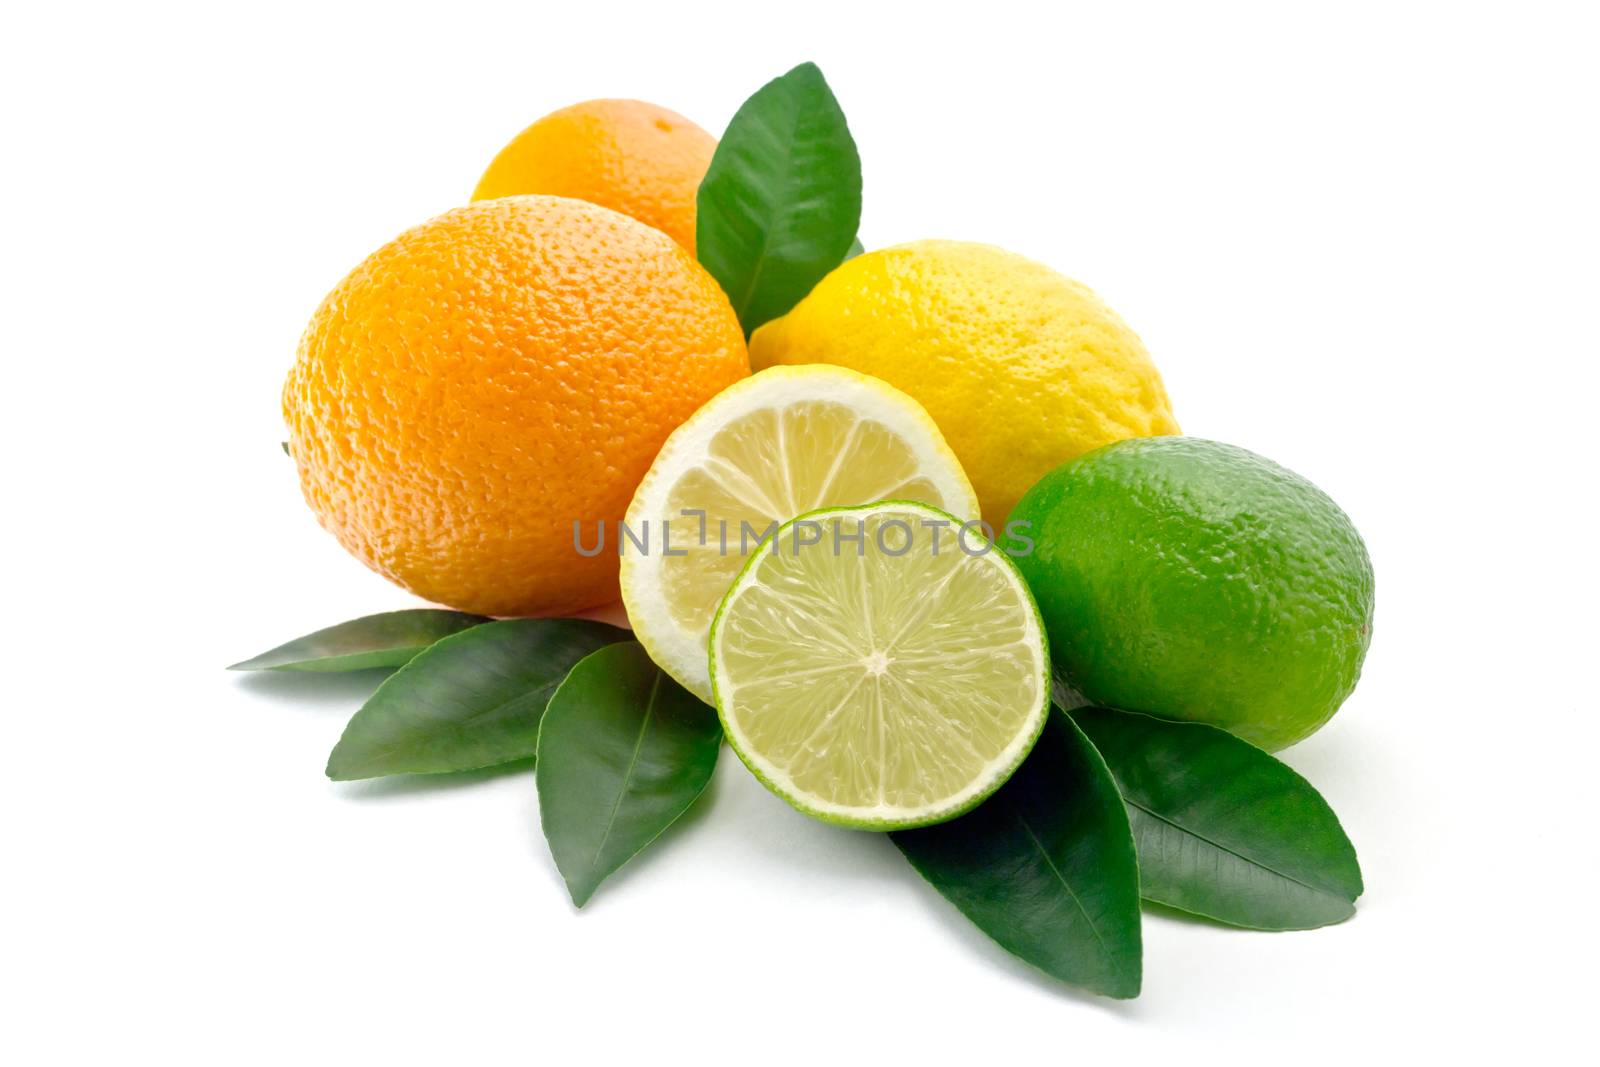 citrus on white background 
lime, orange, lemon
halves of lime and lemon
foliage of citrus trees